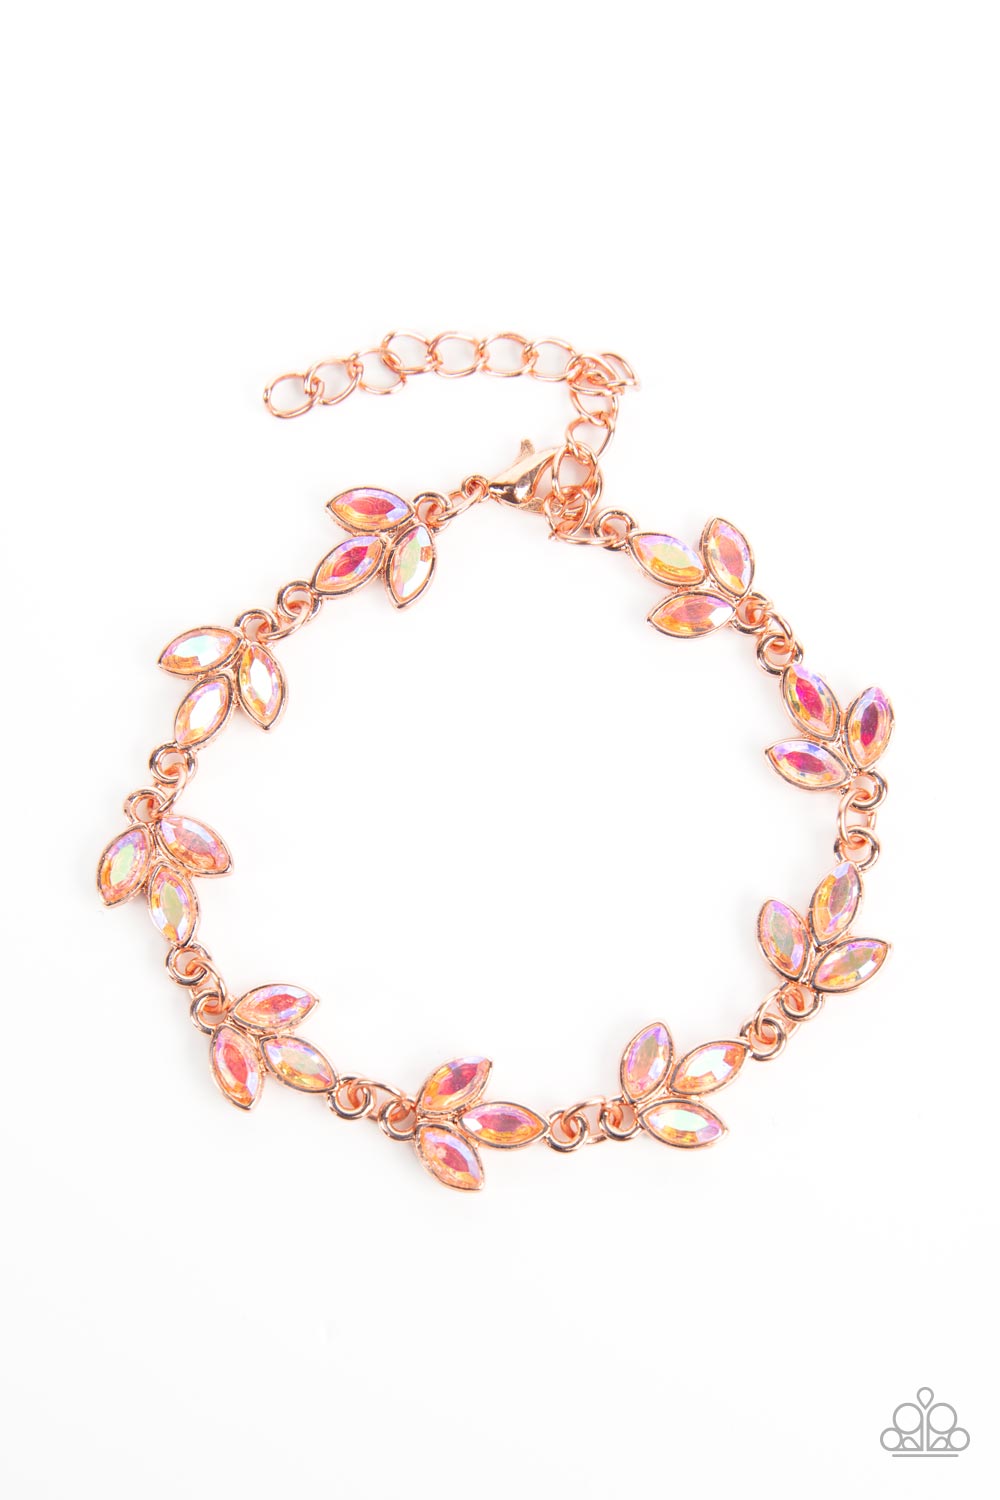 Gala Garland Copper Iridescent Rhinestone Bracelet - Paparazzi Accessories- lightbox - CarasShop.com - $5 Jewelry by Cara Jewels